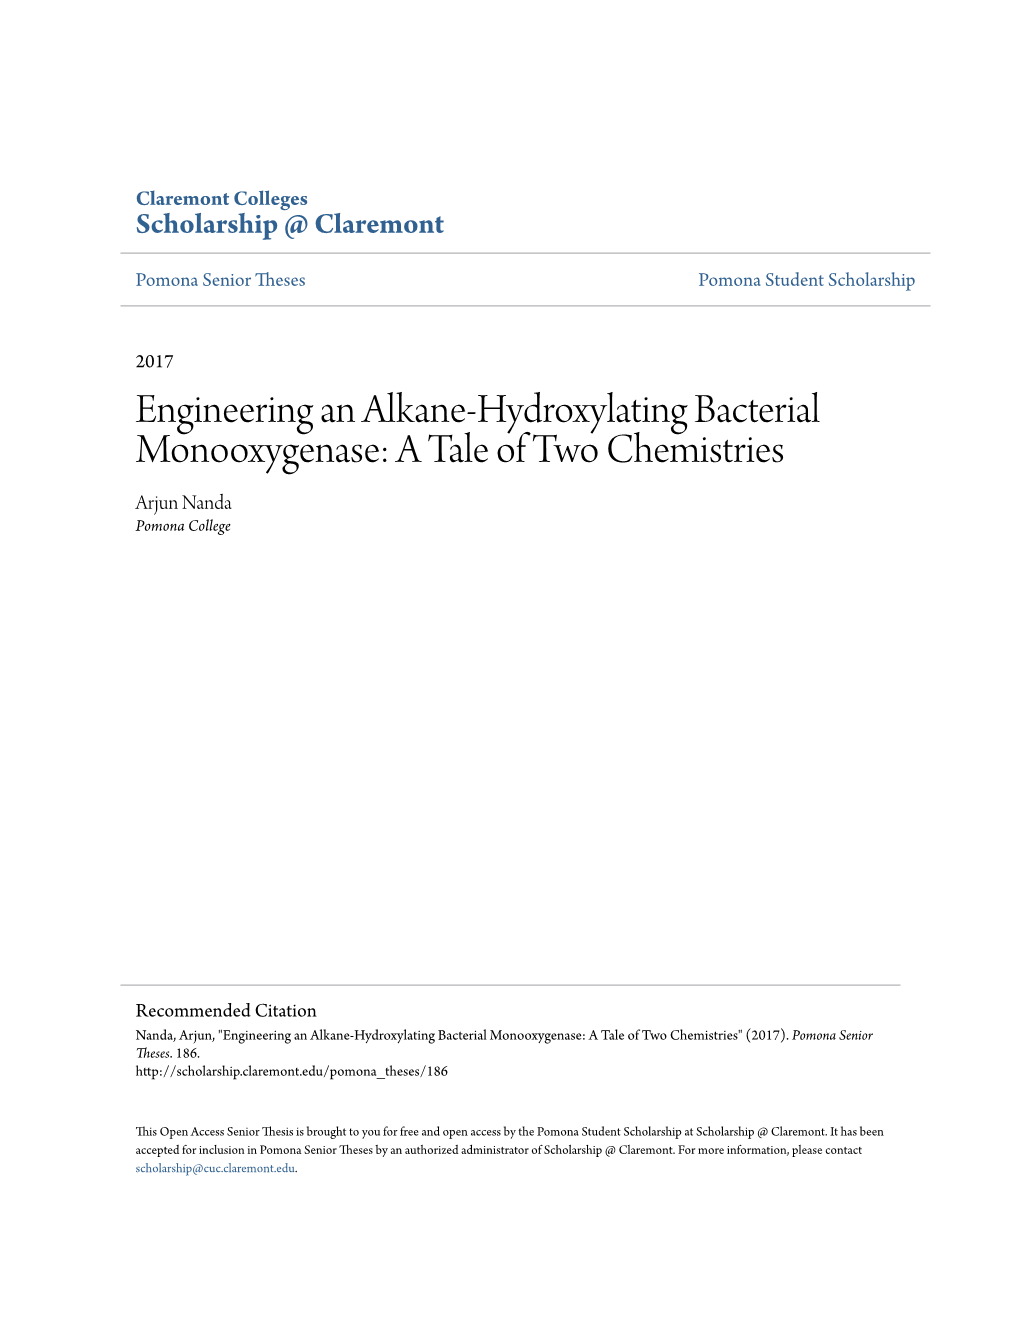 Engineering an Alkane-Hydroxylating Bacterial Monooxygenase: a Tale of Two Chemistries Arjun Nanda Pomona College